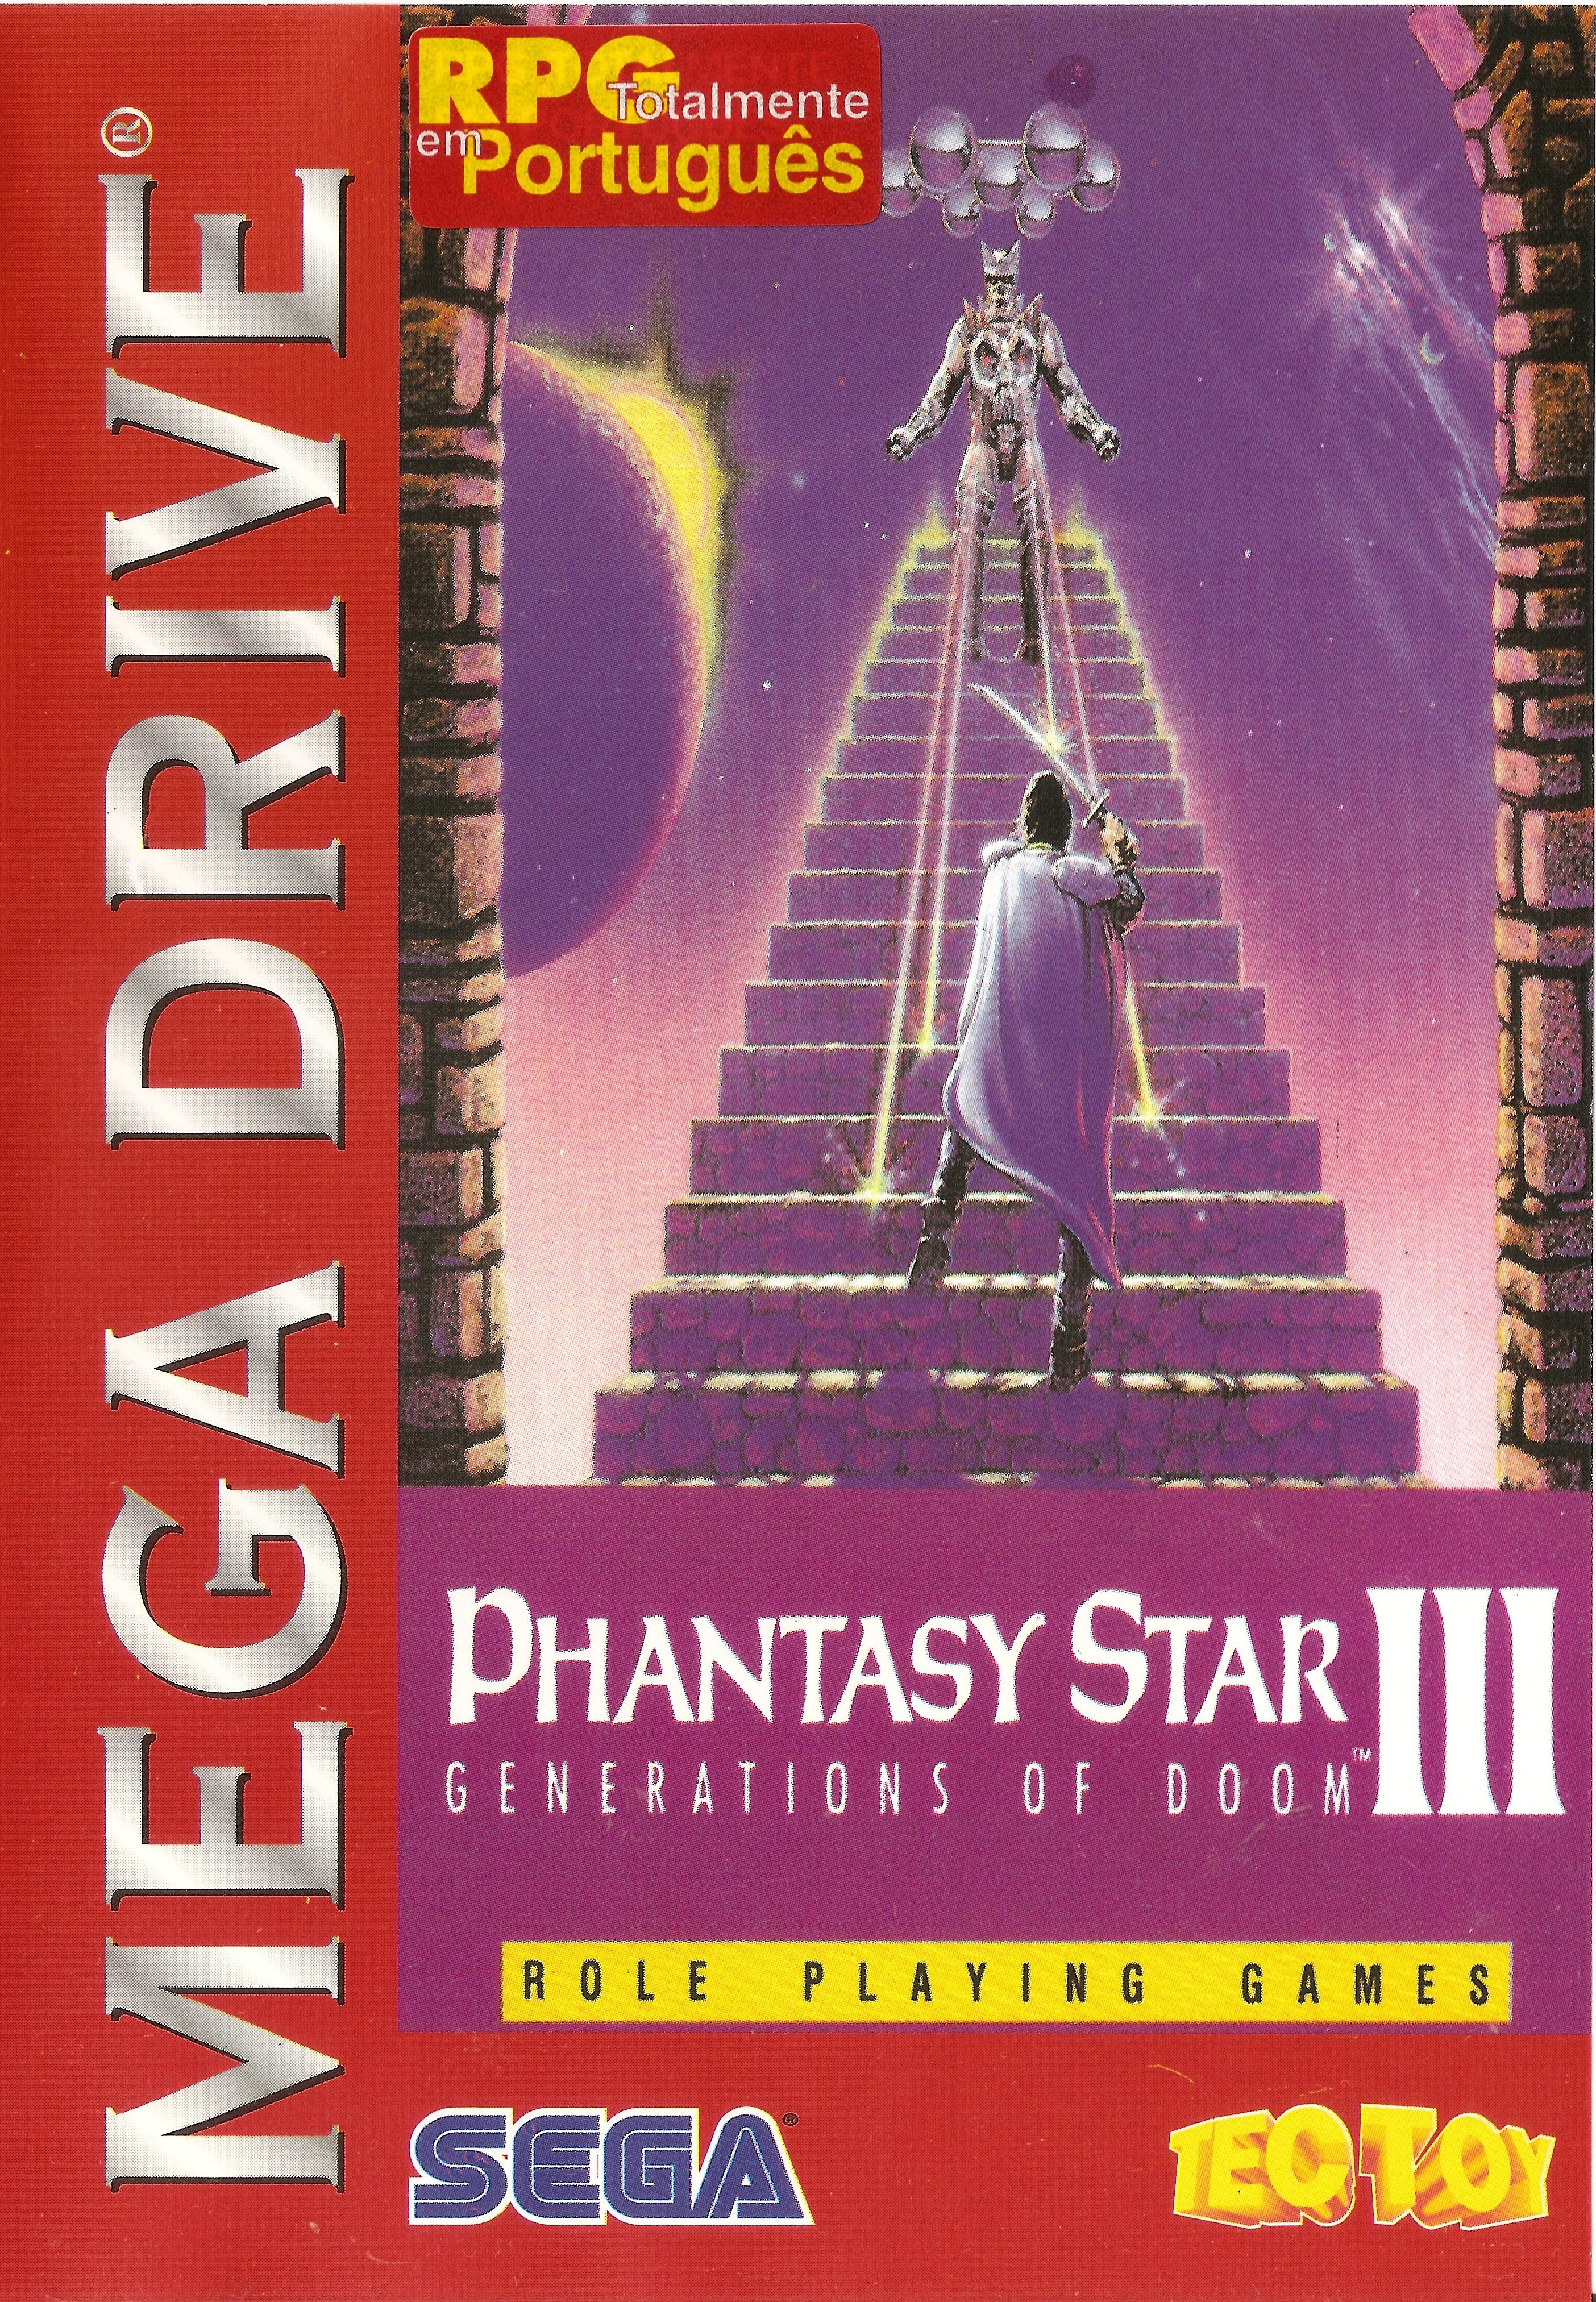 Phantasy Star III: Generations of Doom Details - LaunchBox Games Database